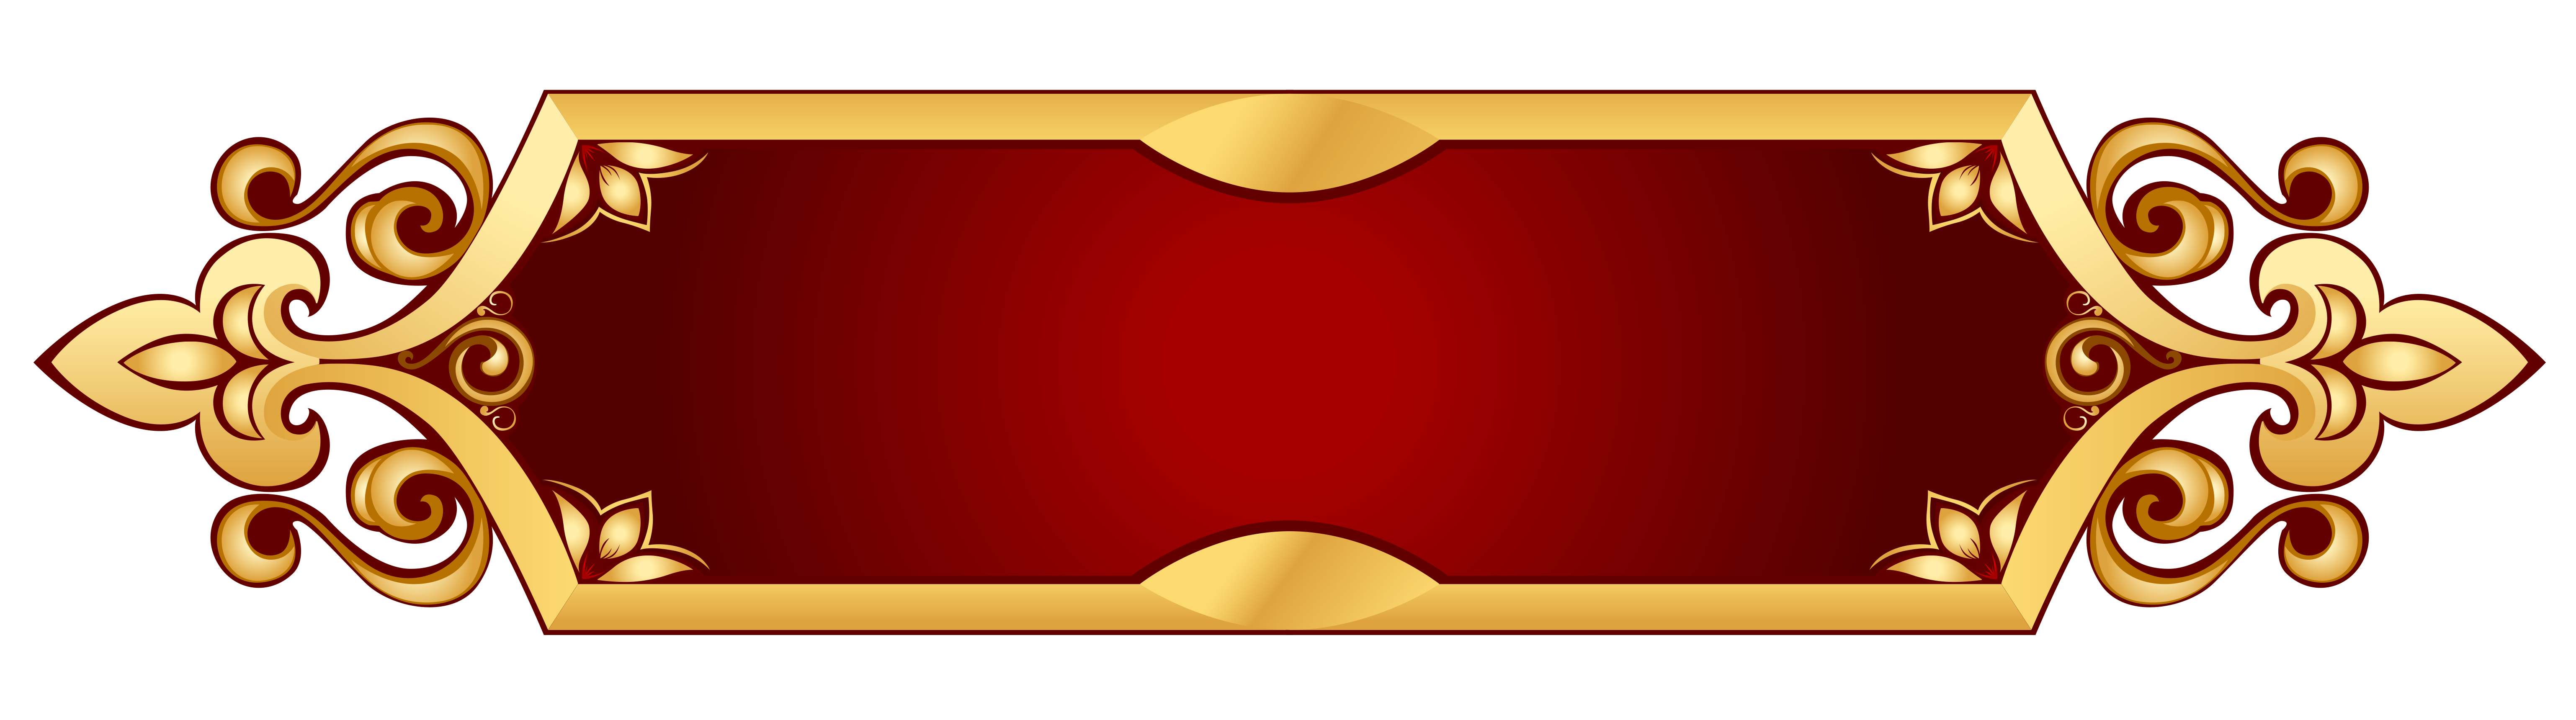 Banner de oro fondo Transparente PNG